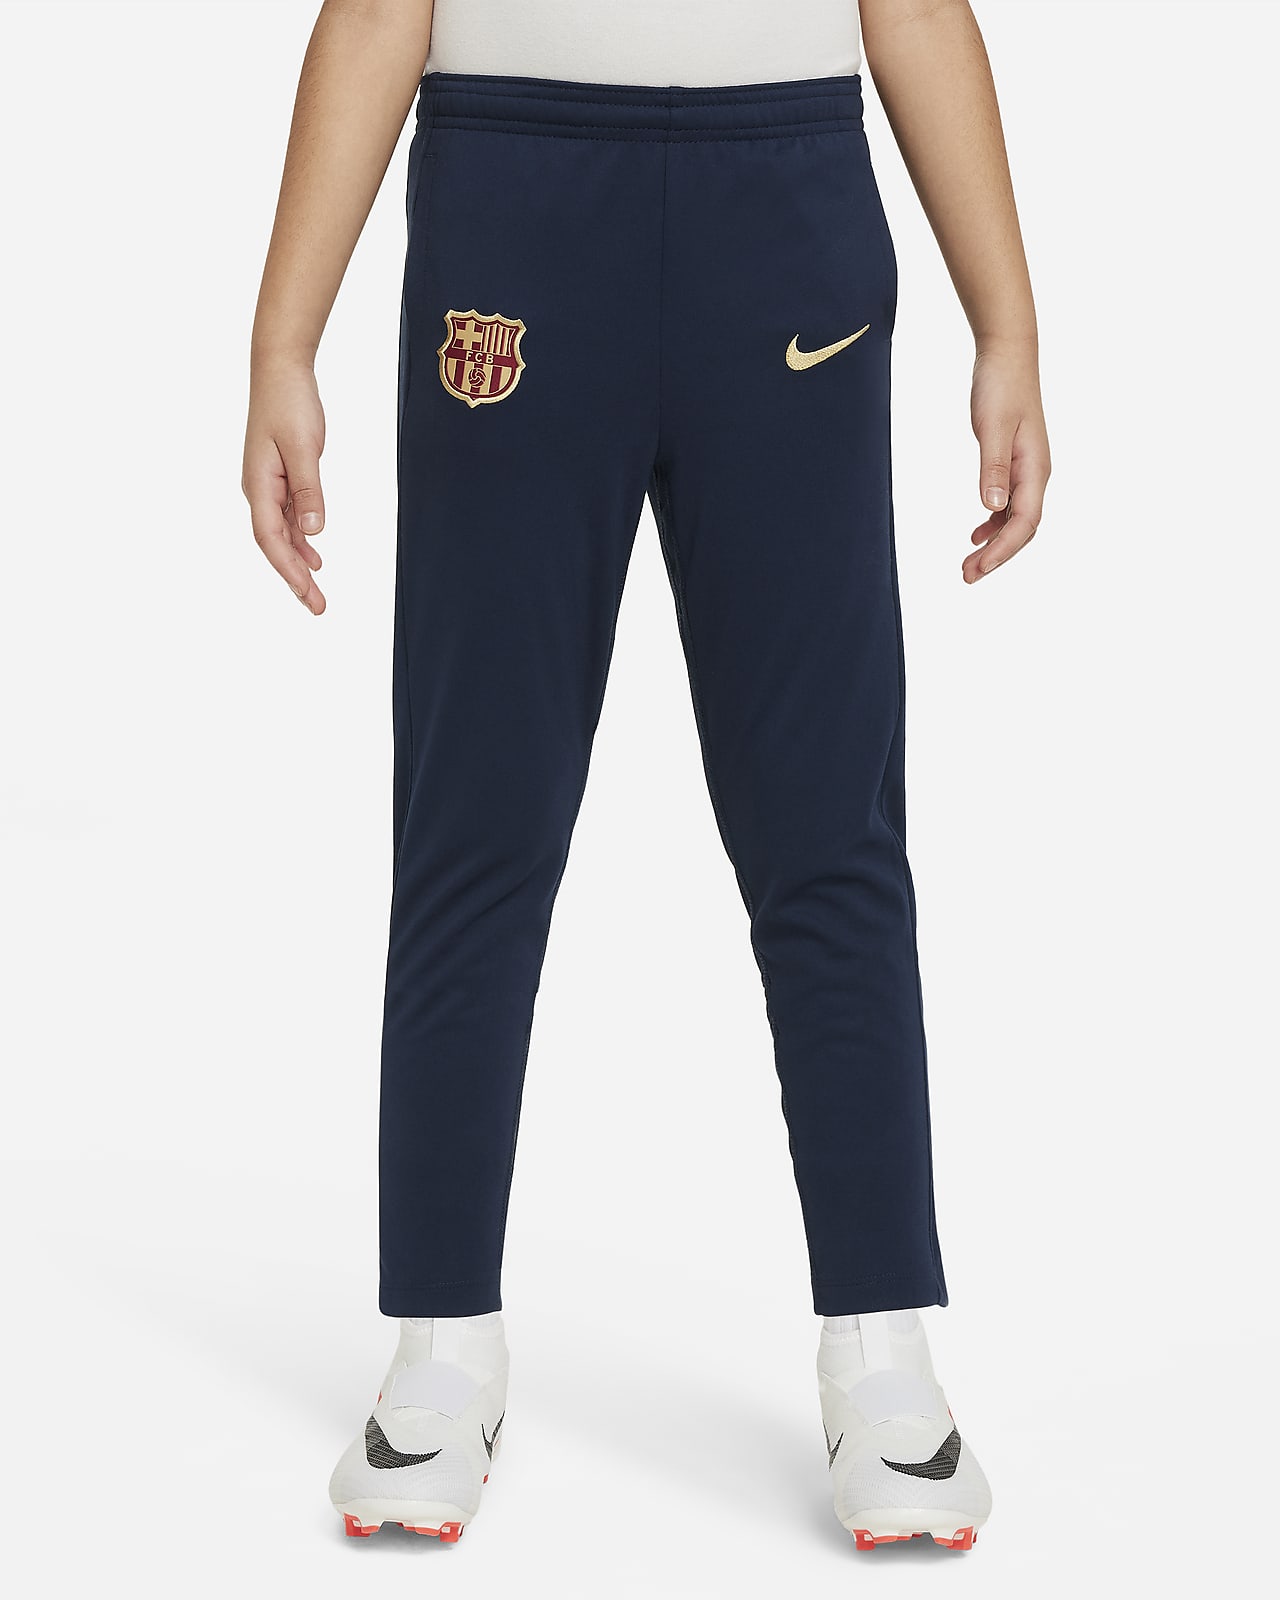 Pantaloni in maglia Nike Football FC Barcelona Academy Pro – Bambino/a